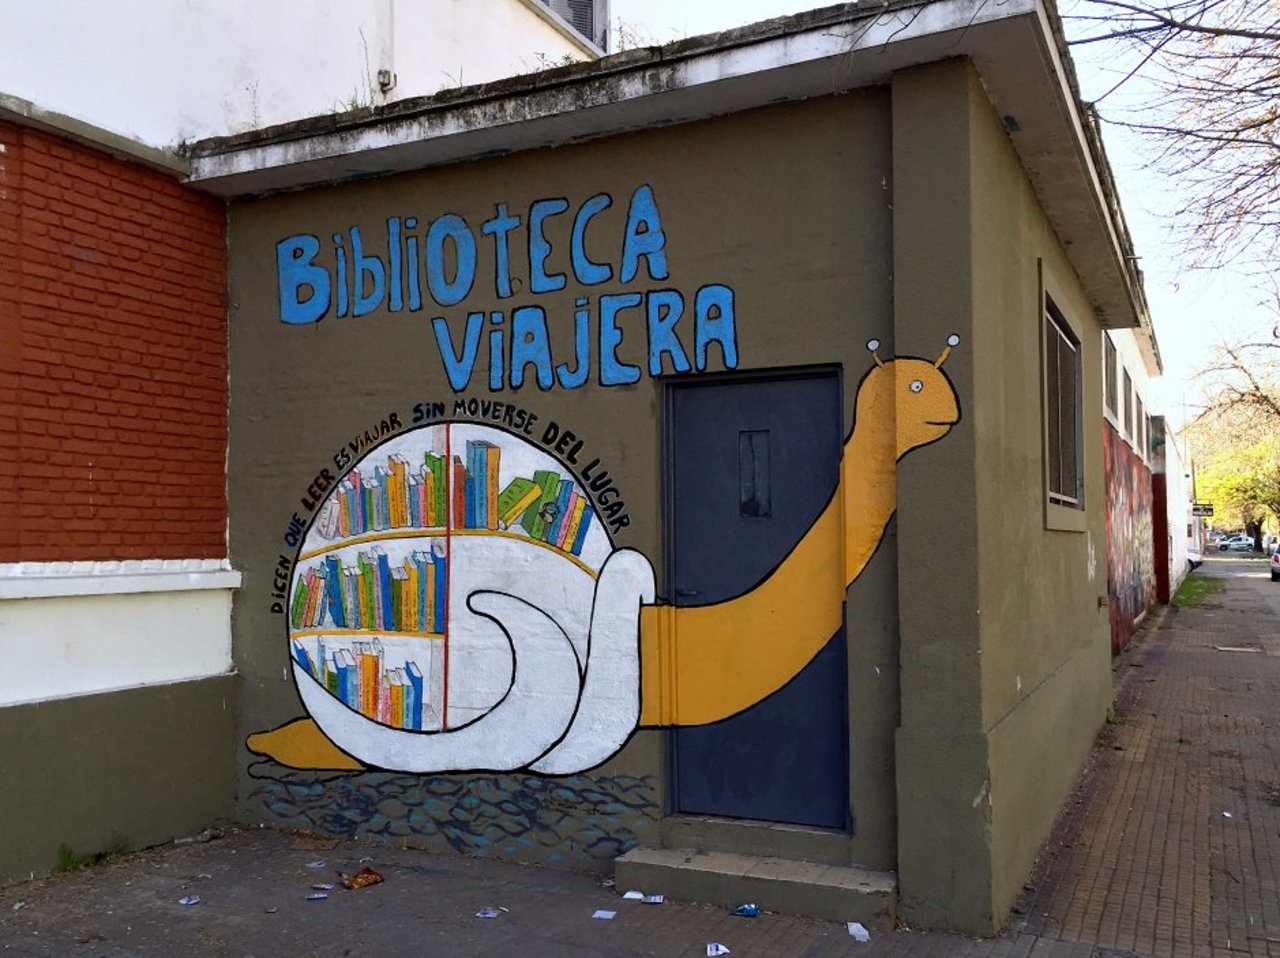 RT @DickieRandrup: #Graffiti de hoy: << The books snail >> calle 22,63y64 #LaPlata #Argentina #StreetArt #UrbanArt #ArteUrbano https://t.co/PcX82xnllE